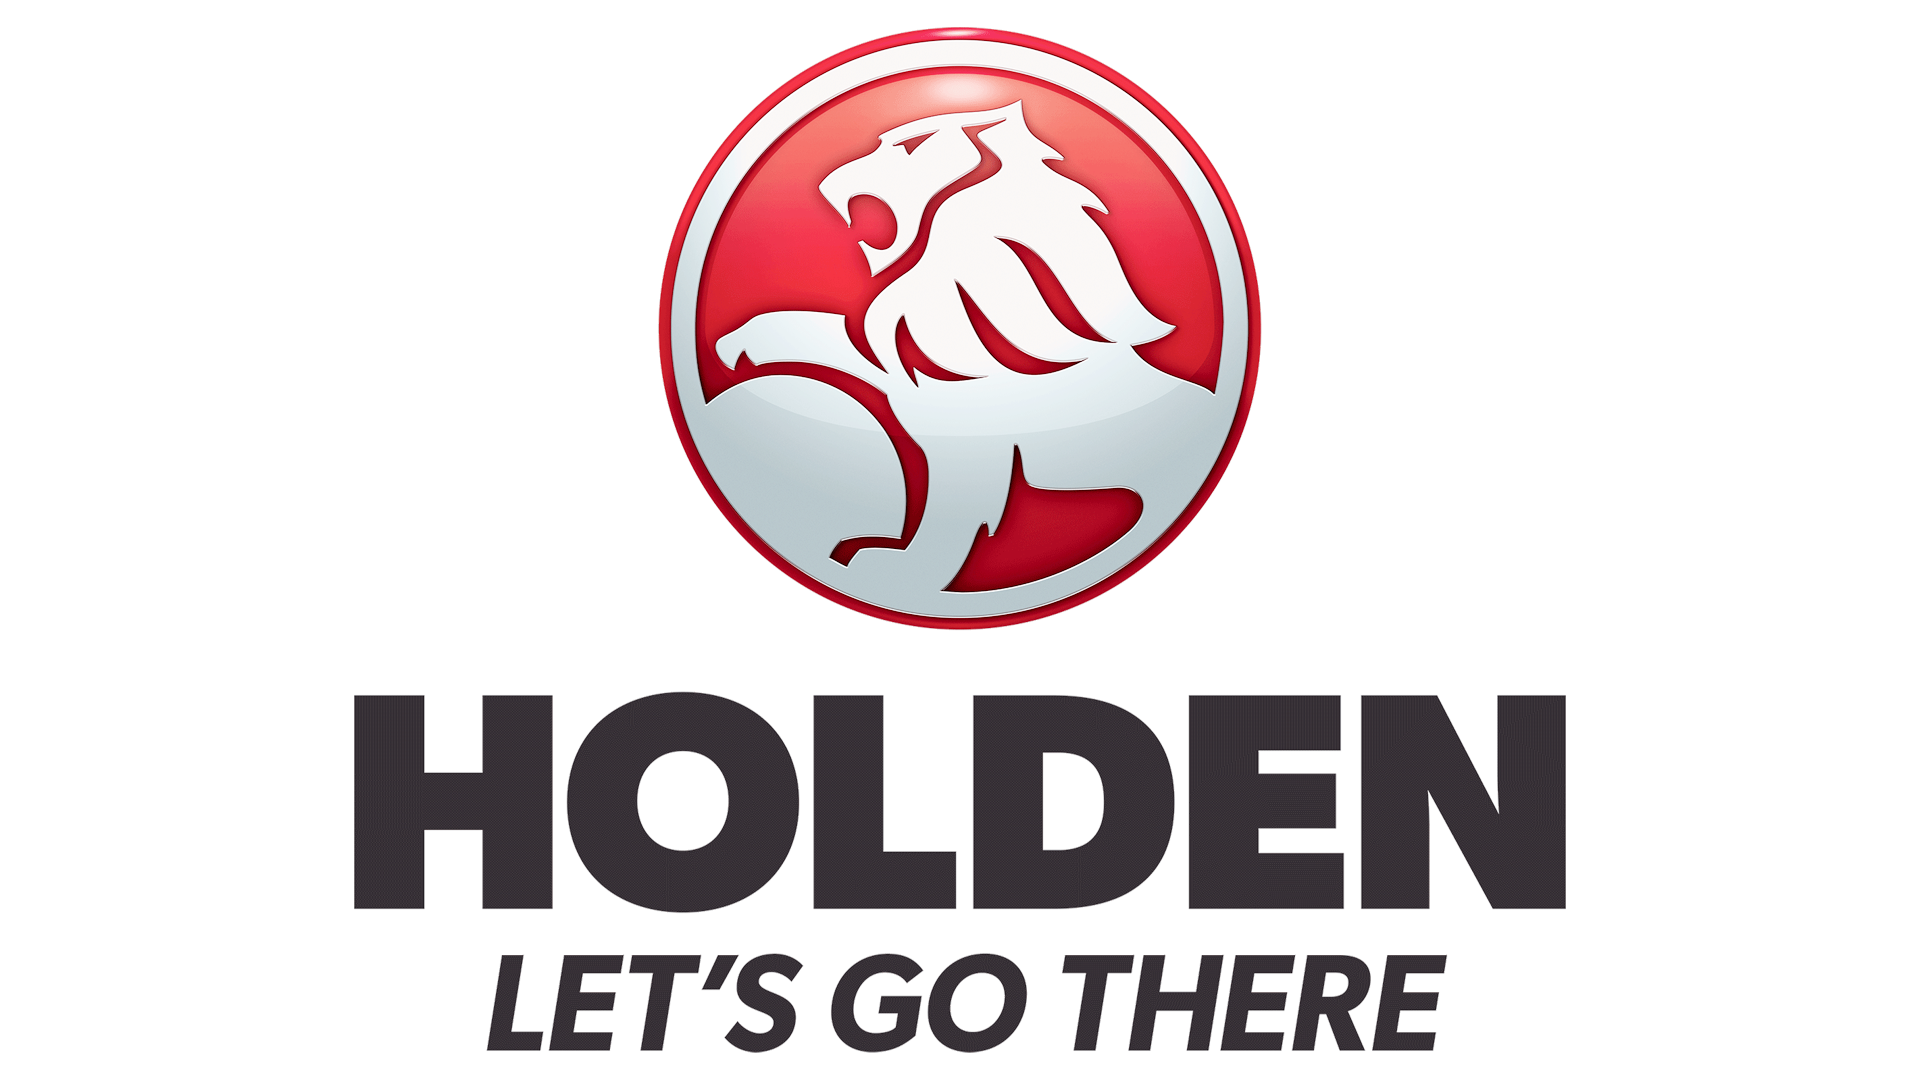 Holden-logo-2014-1920x1080.png